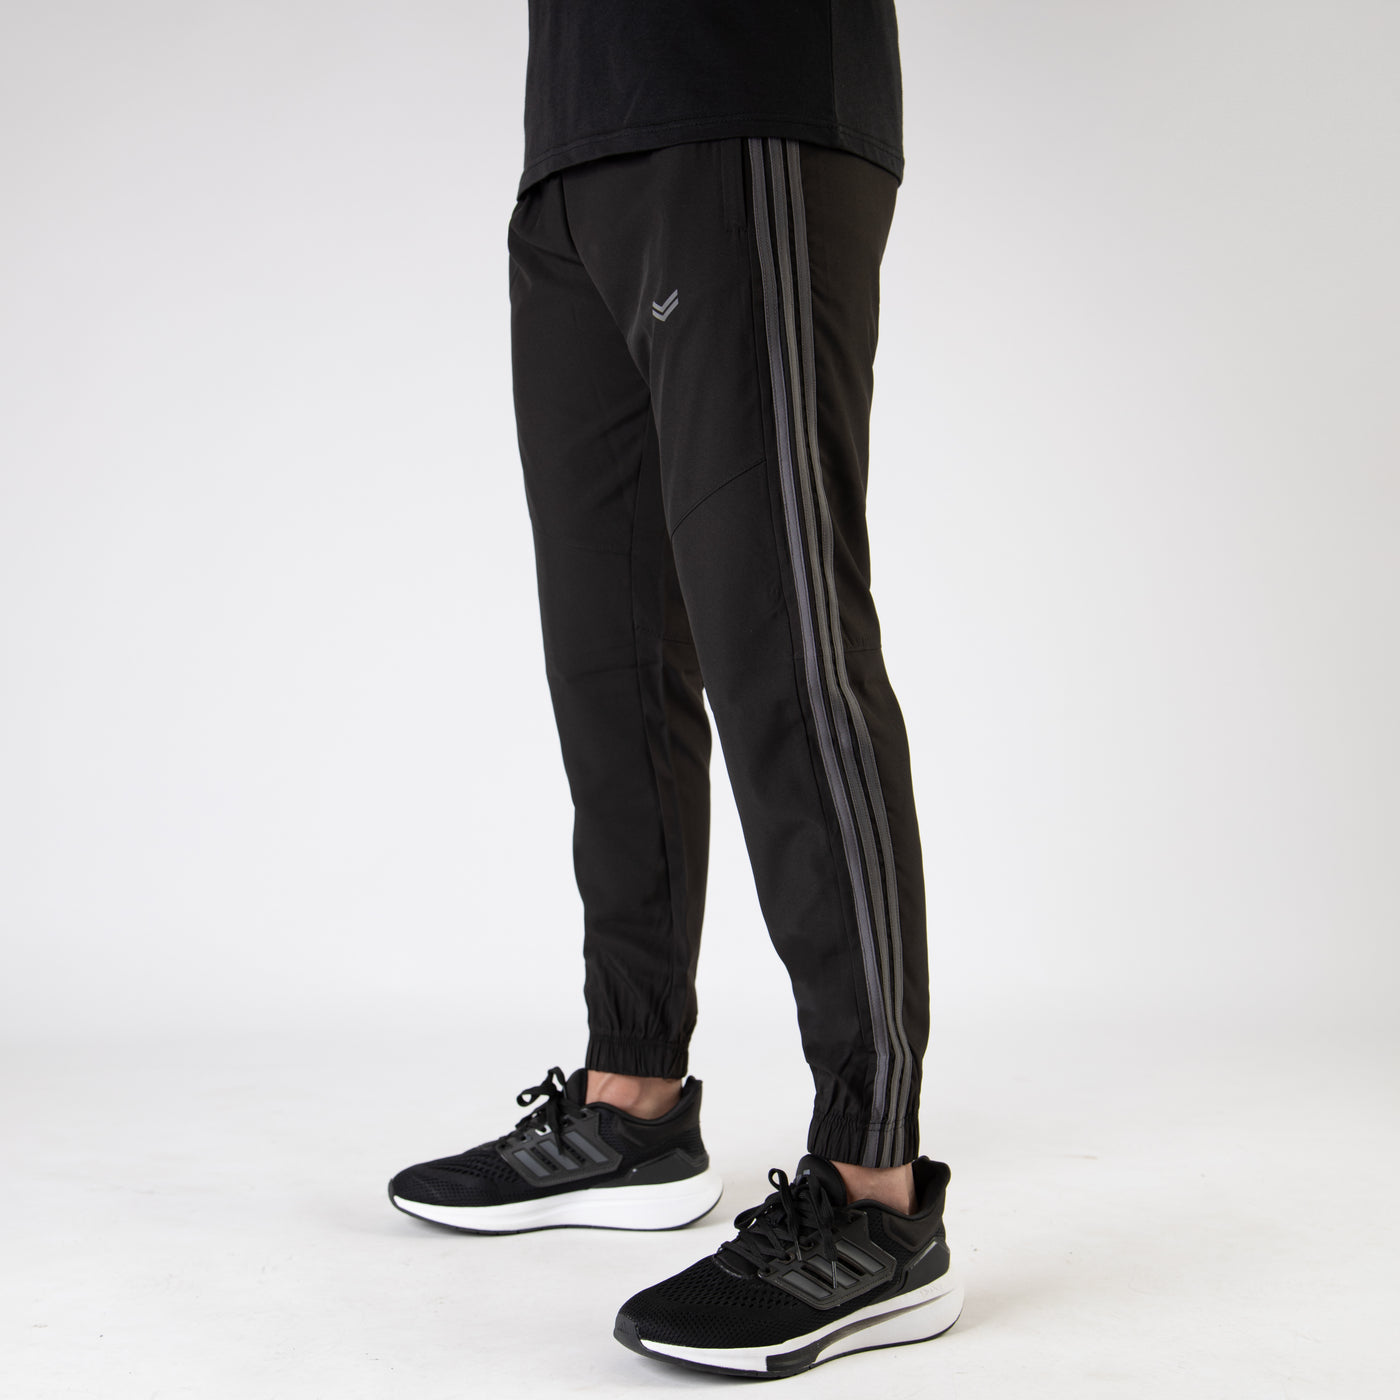 Black Premium Micro Stretch Pants with Three Gray Stripes